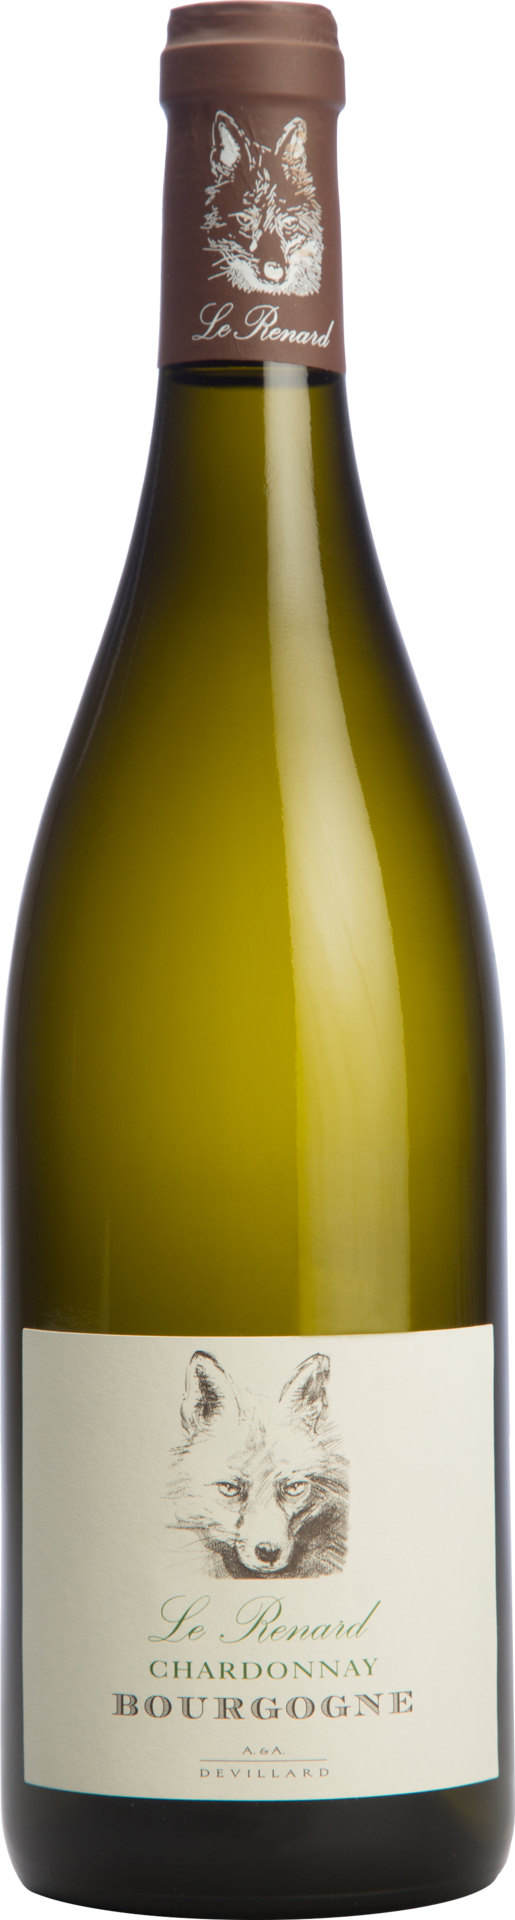 Le Renard Bourgogne Chardonnay - 2017